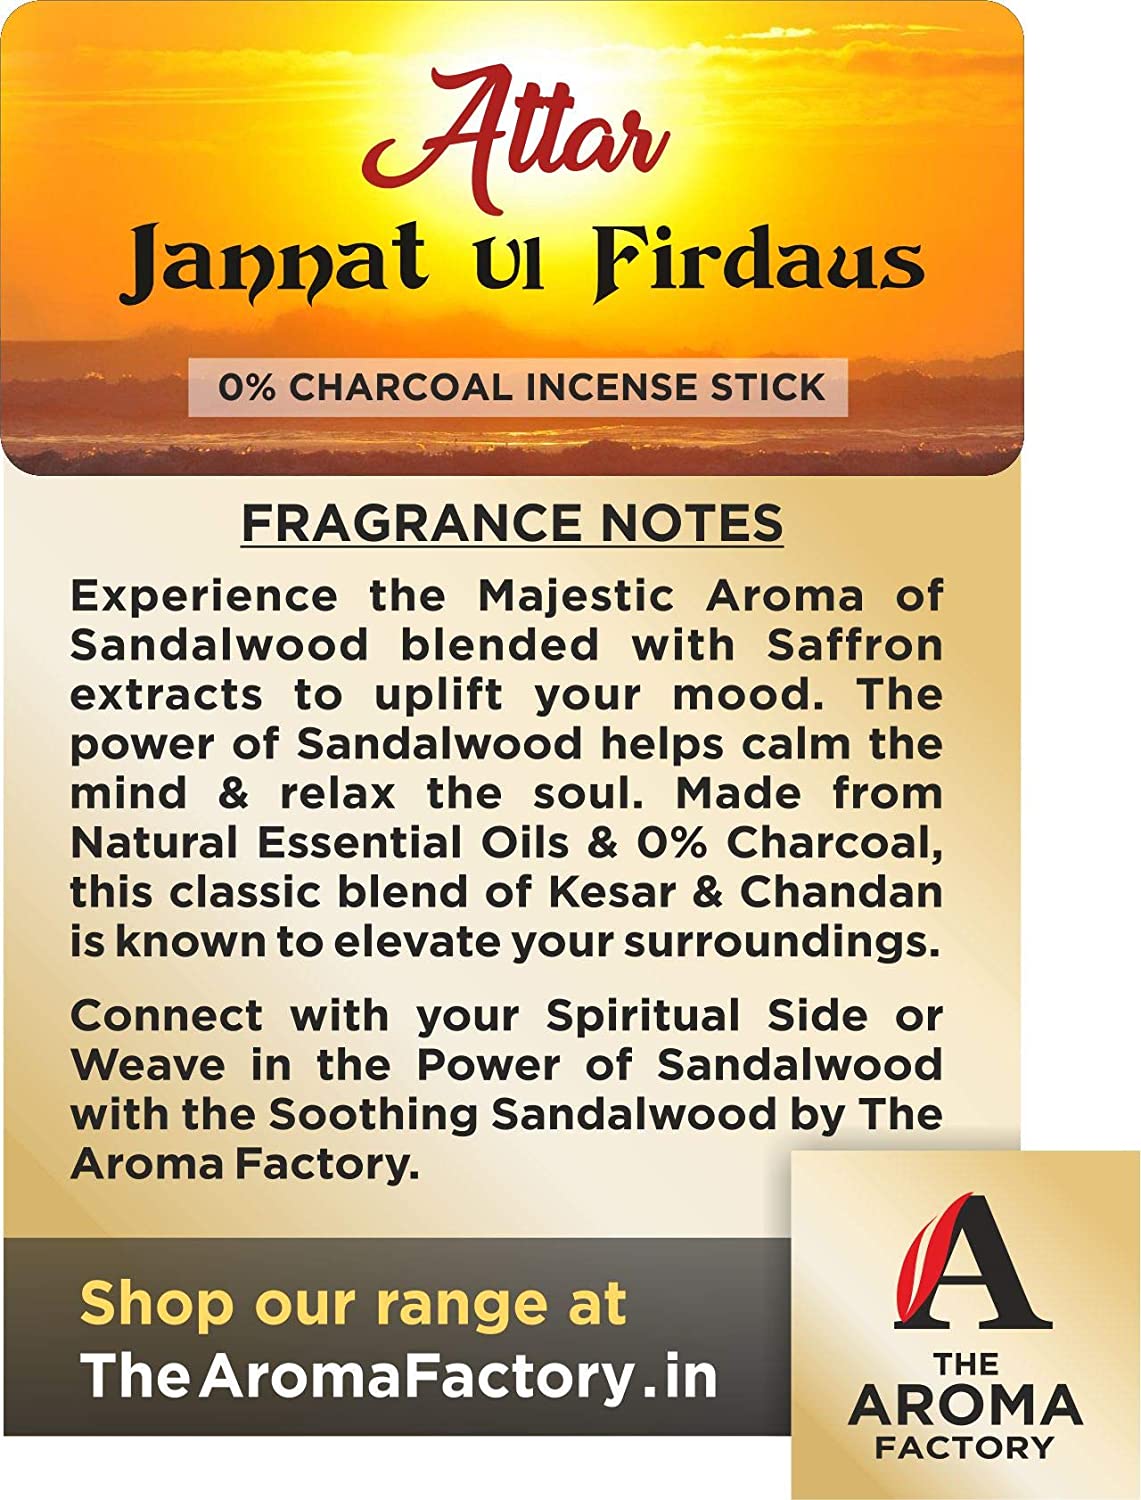 The Aroma Factory Chocolate & Attar Jannat UlFirdaus Agarbatti (Charcoal Free & Low Smoke) Bottle Pack of 2 x 100